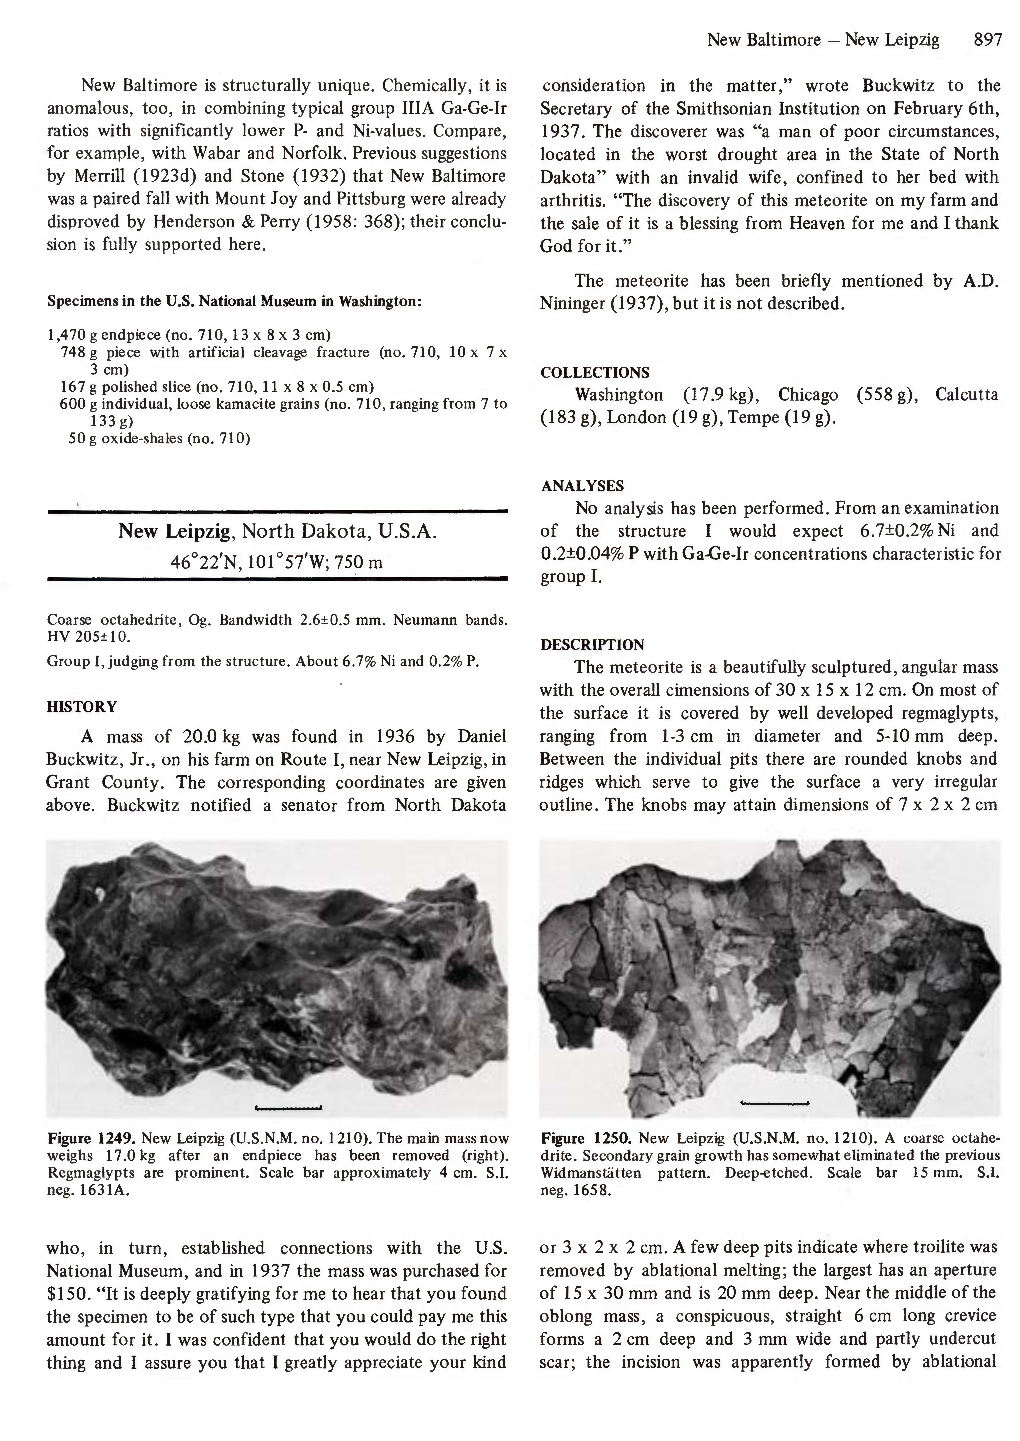 Handbook of Iron Meteorites, Volume 3 (New Leipzig